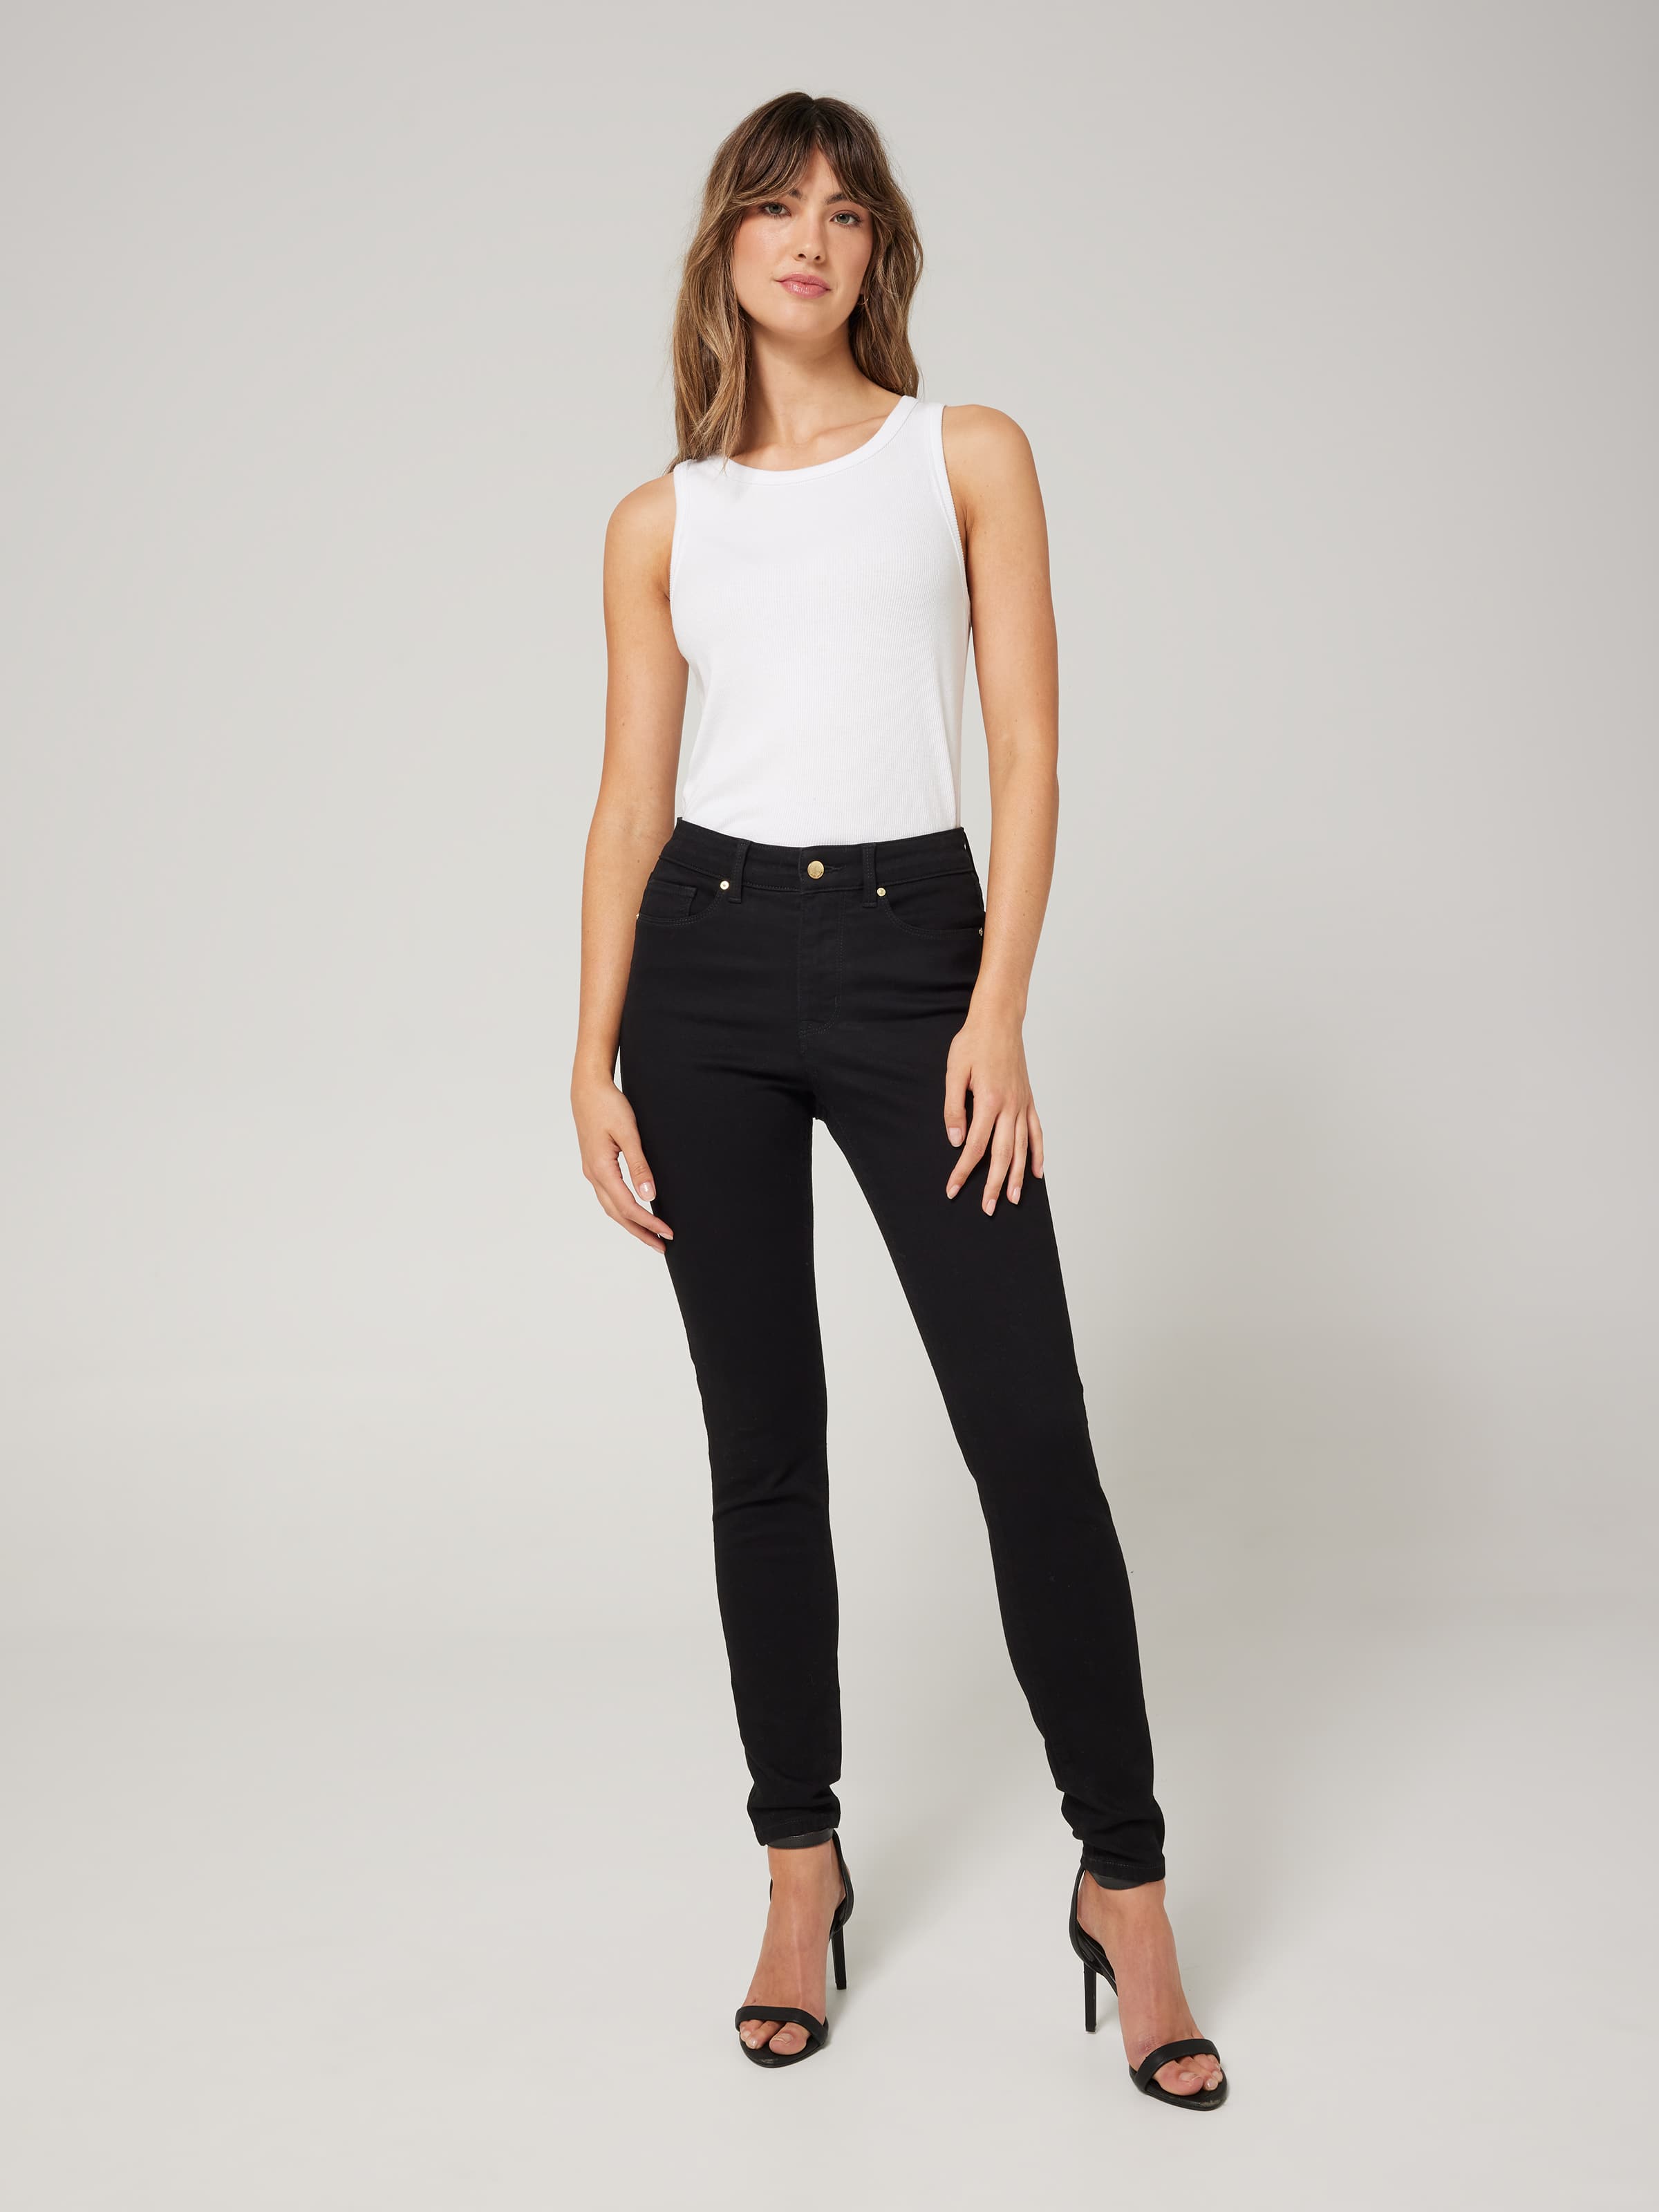 Reformed High Rise Skinny Jean - Just Jeans Online